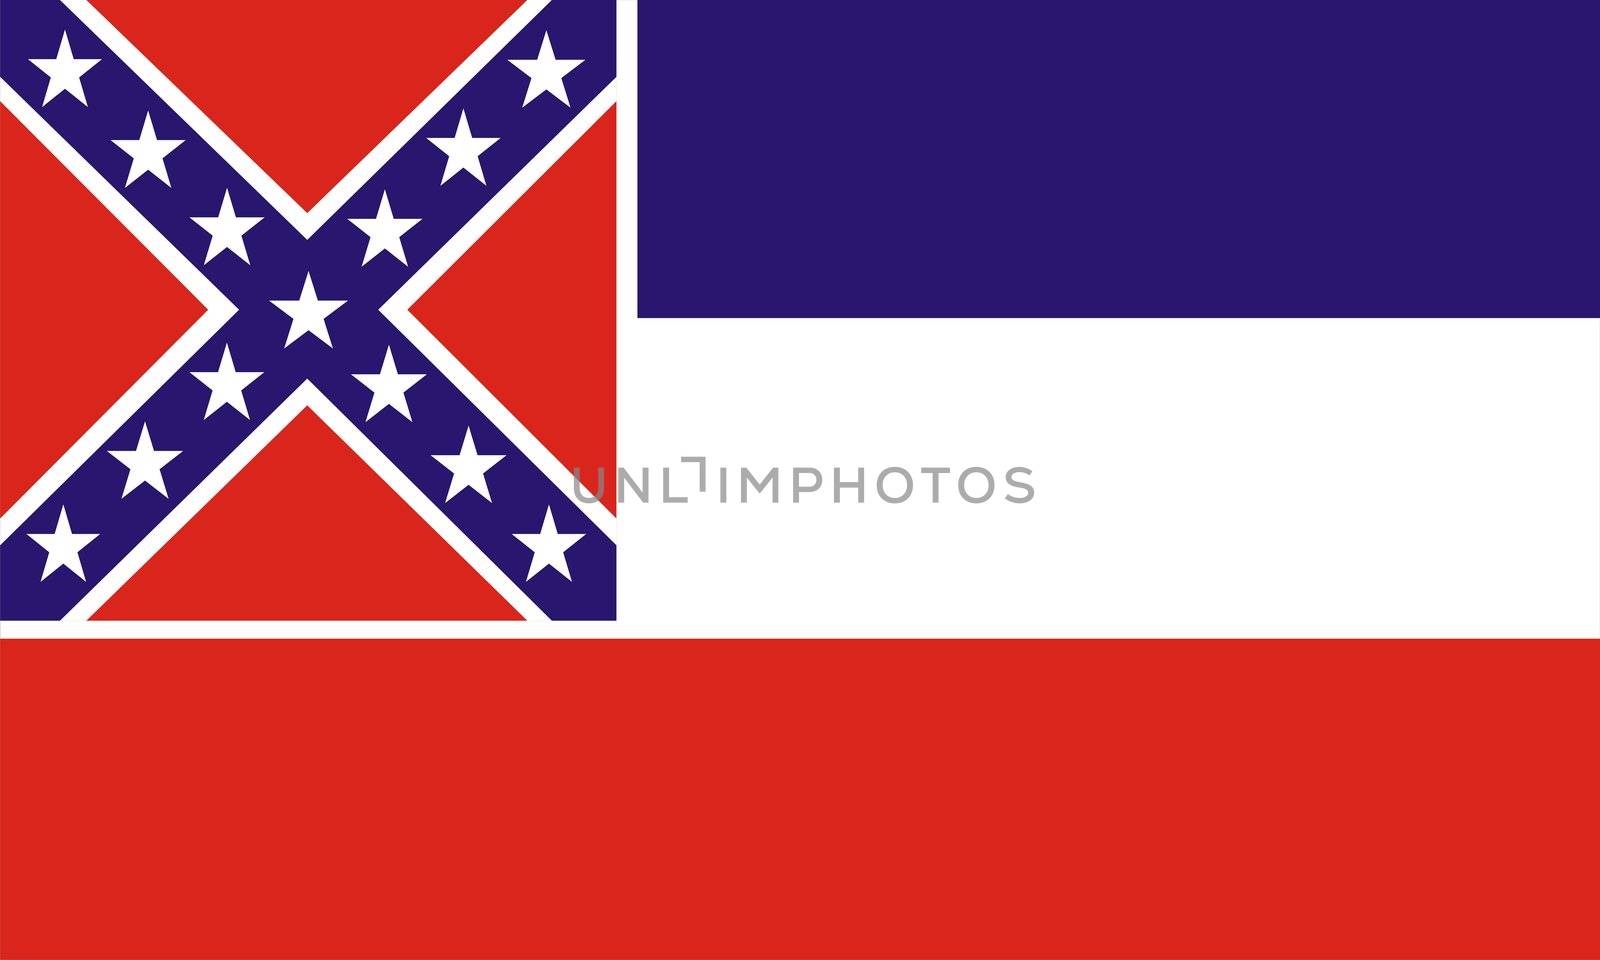 Mississippi flag by tony4urban